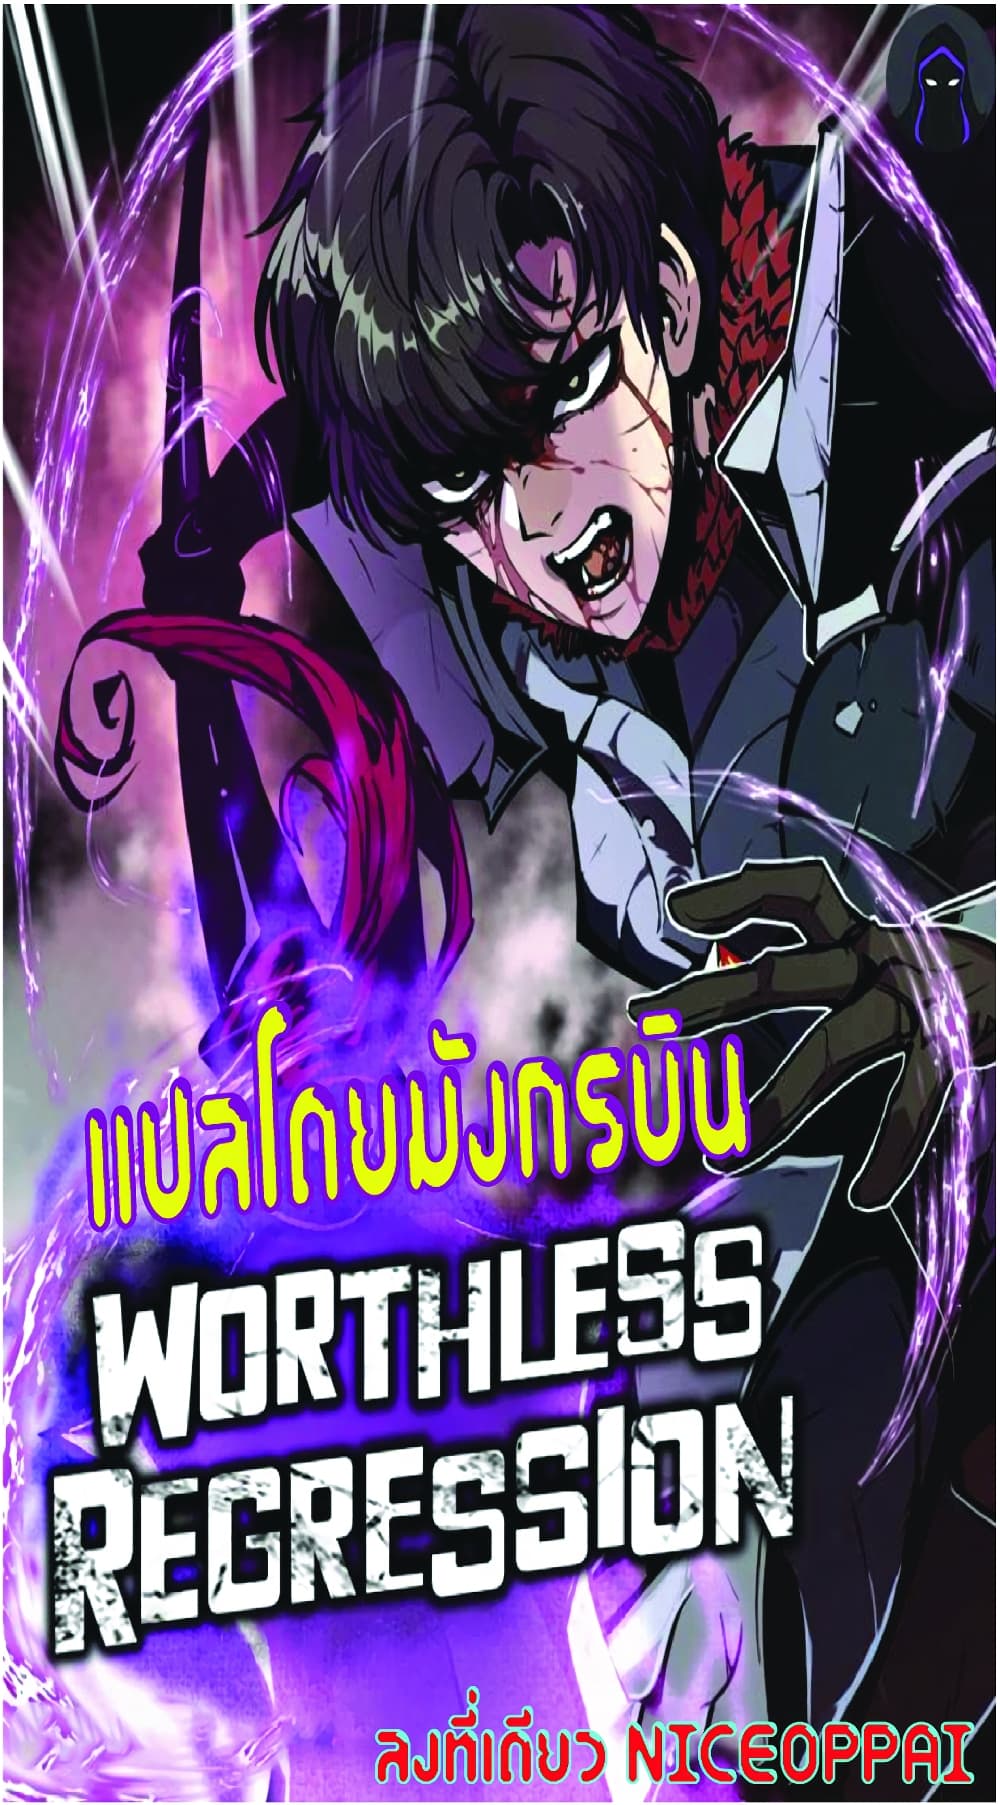 Worthless Regression 23 01